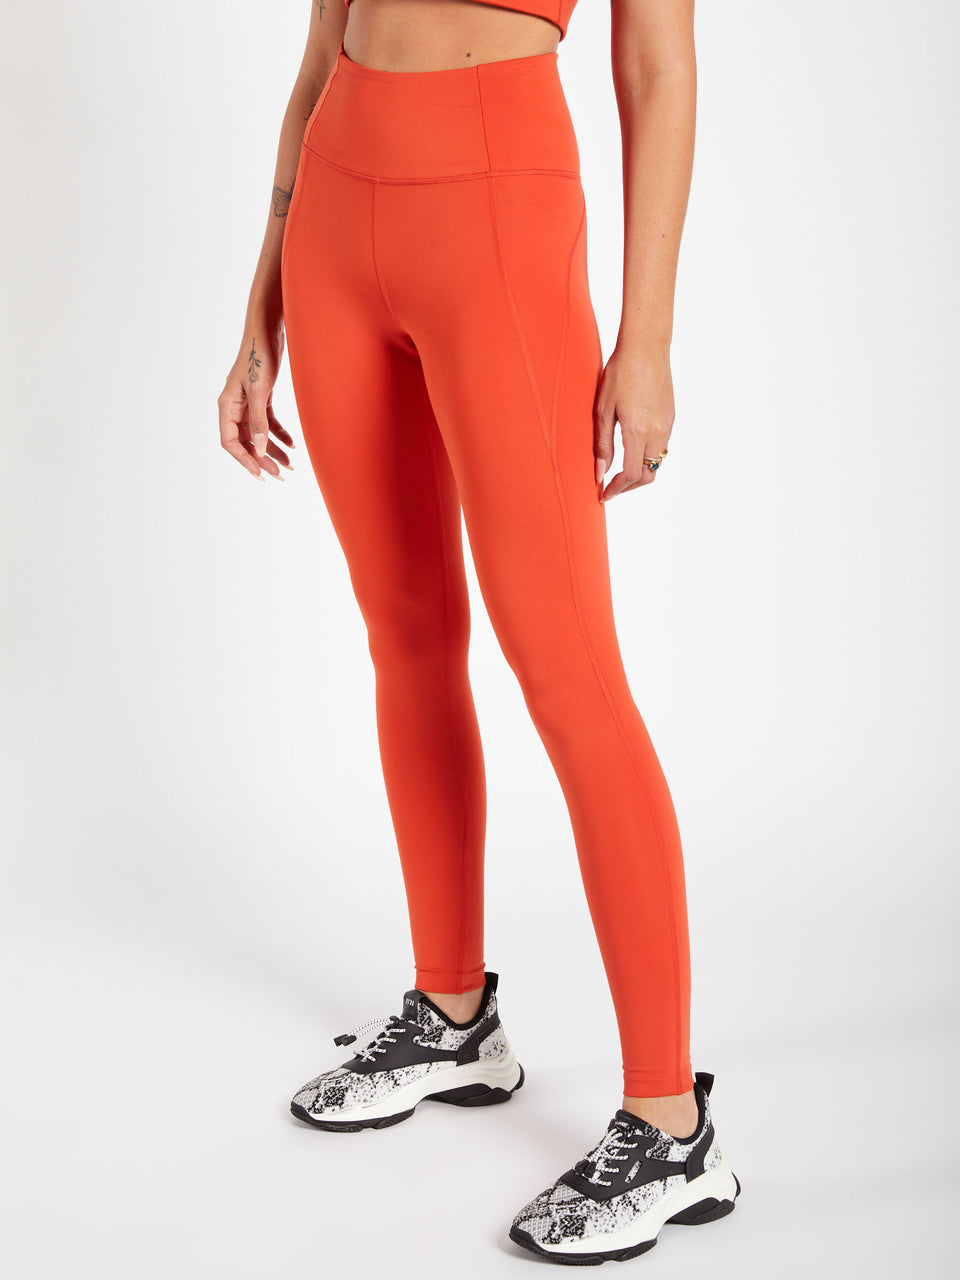 MICHI Women's Velocity Pocket Leggings, Fire Orange/Ivory, XS at